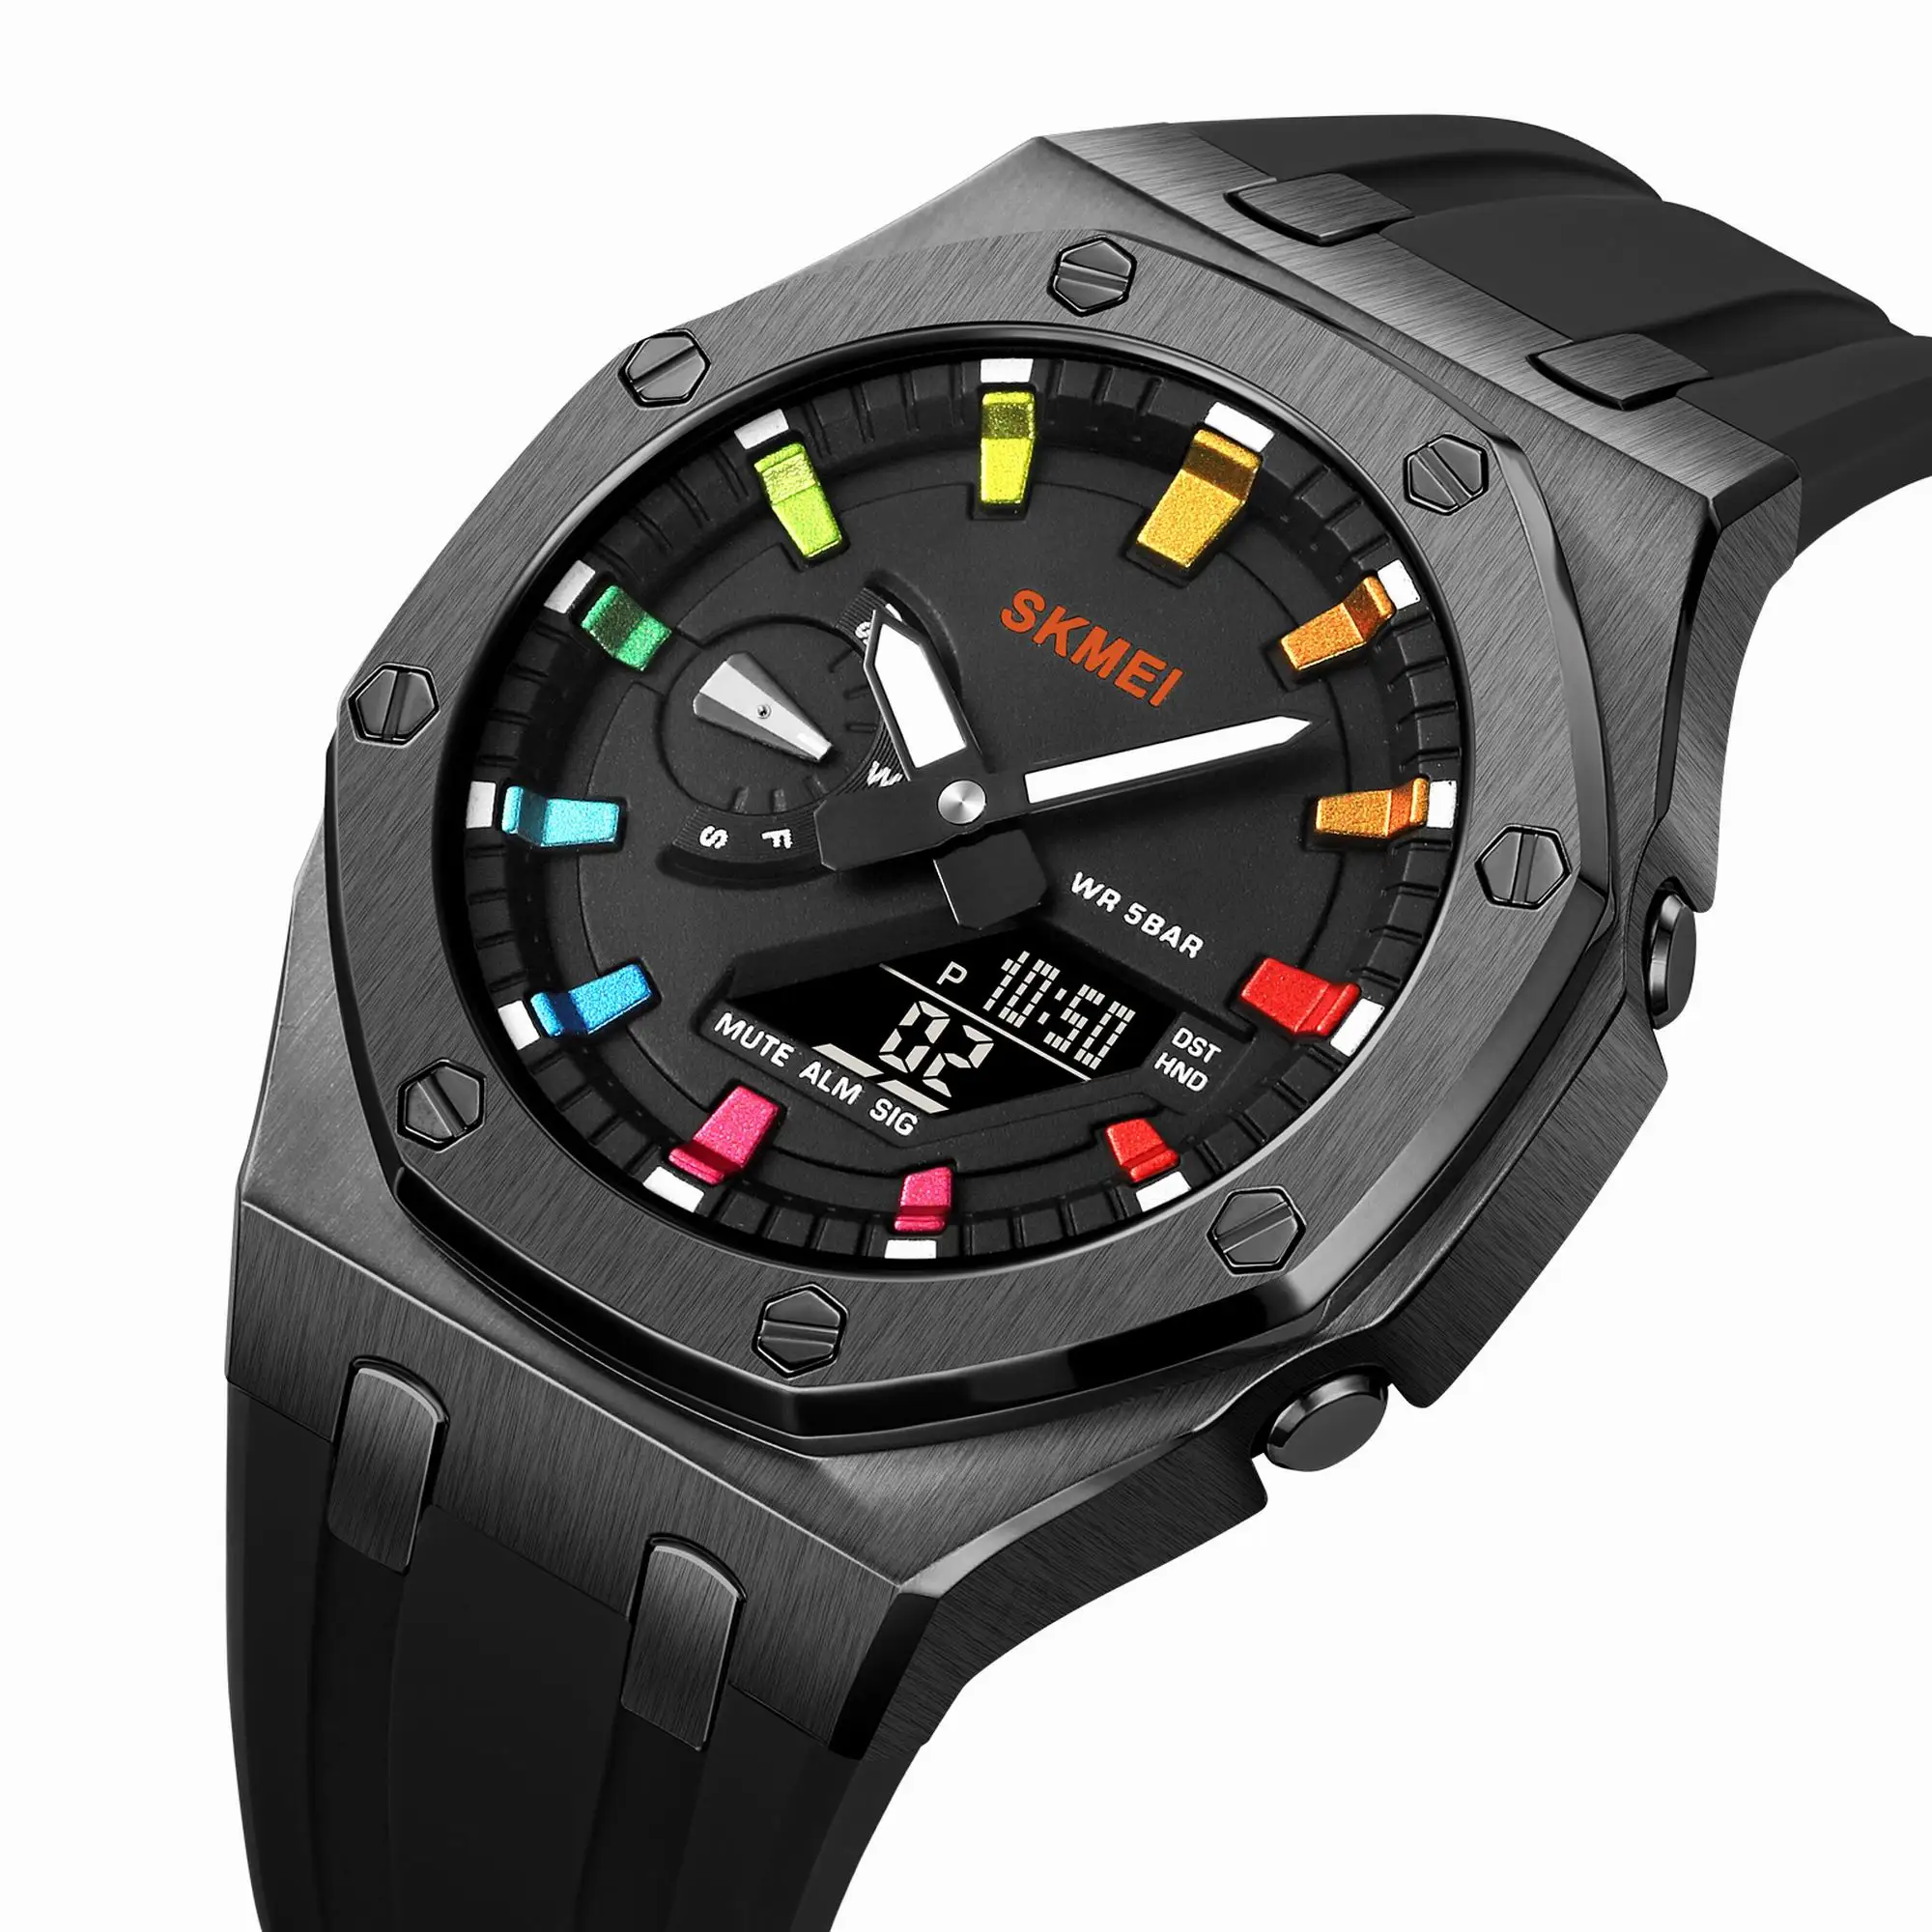 

Wholesale Waterproof Watch 5 Alarms Skmei 2243 Relojes Sport Men Watch Relogio Quartz Analog Digital Watches Wrist